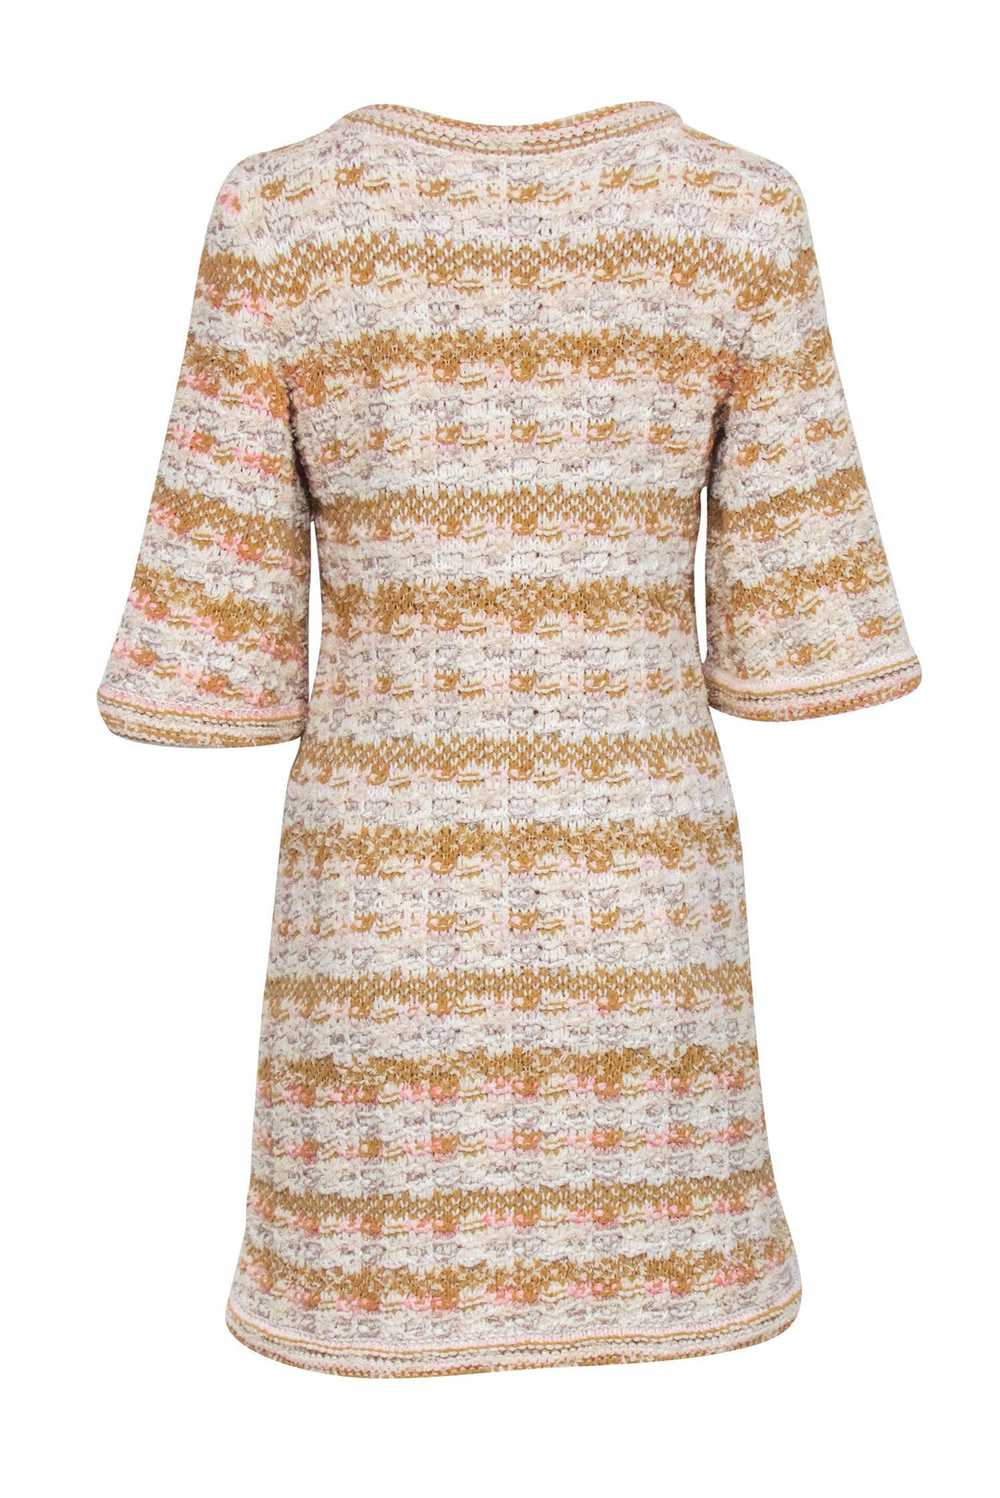 Chanel - Ivory, Tan, & Pink Tweed Knit Dress Sz 4 - image 3